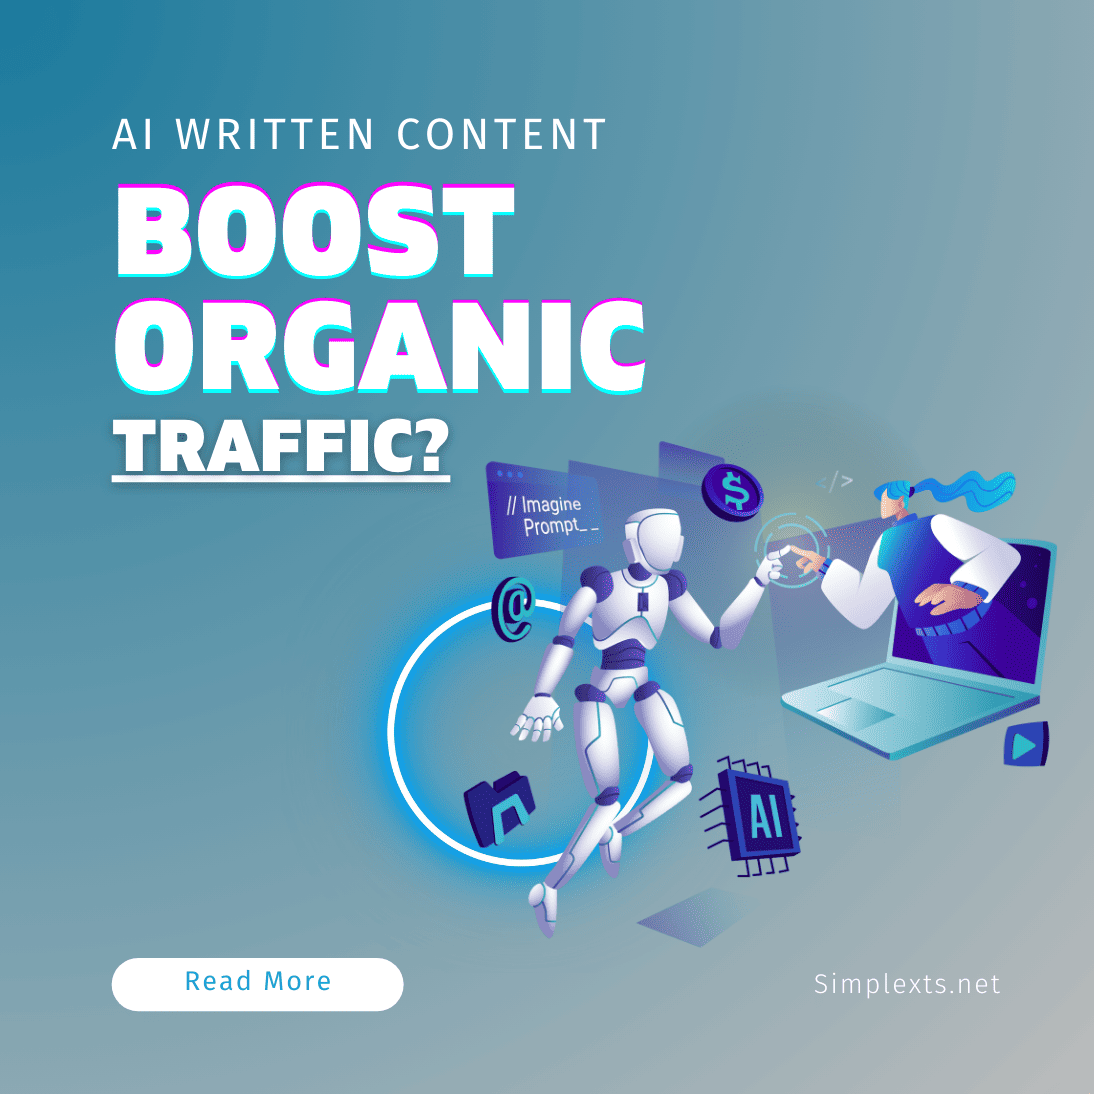 Can AI content increase organic traffic